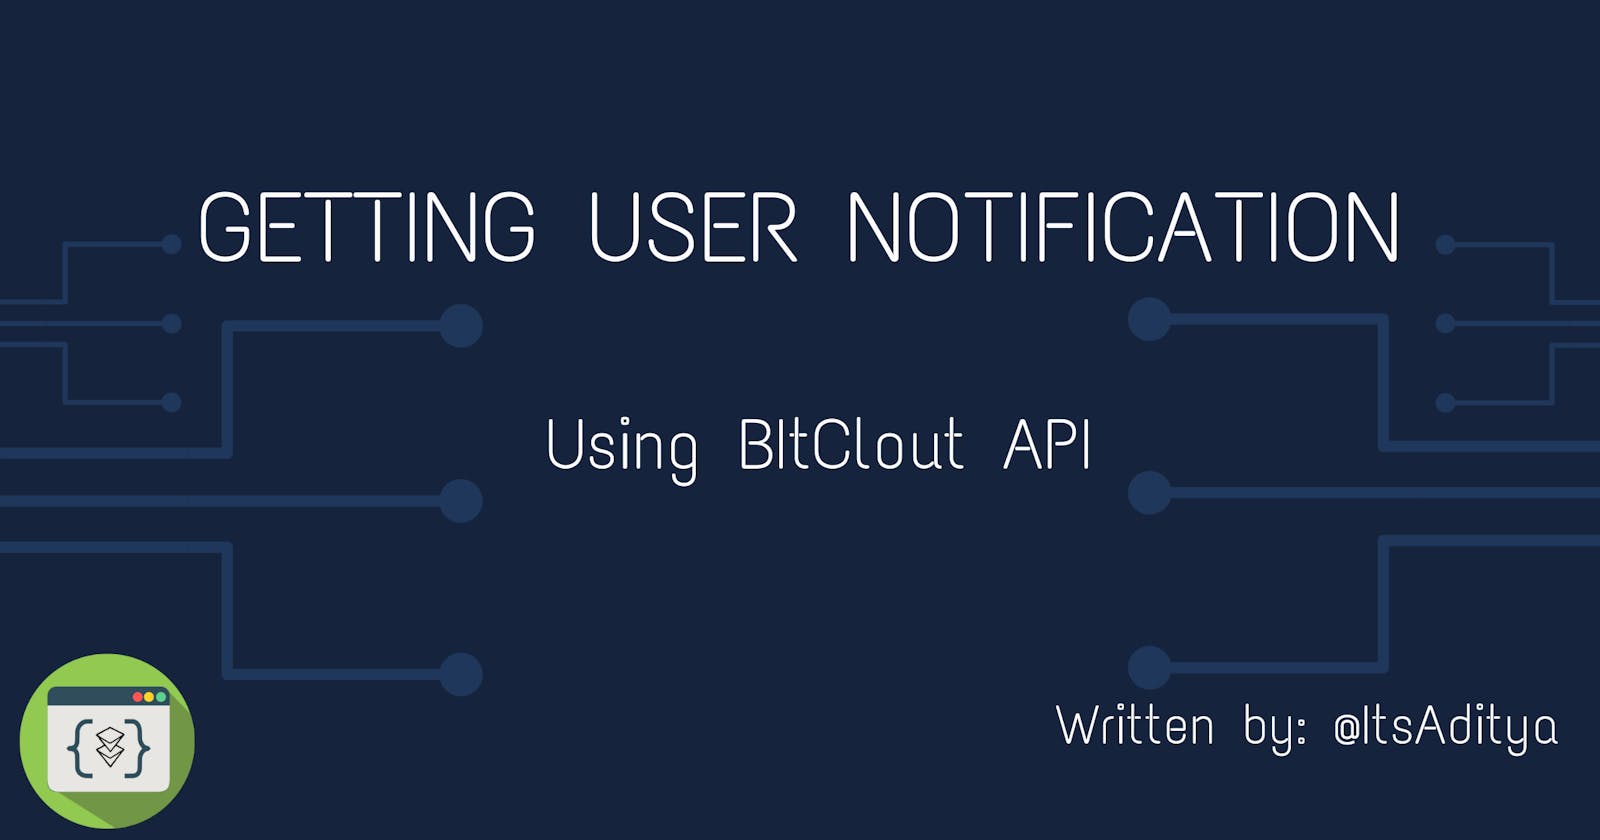 Getting BitClout user Notification through public key